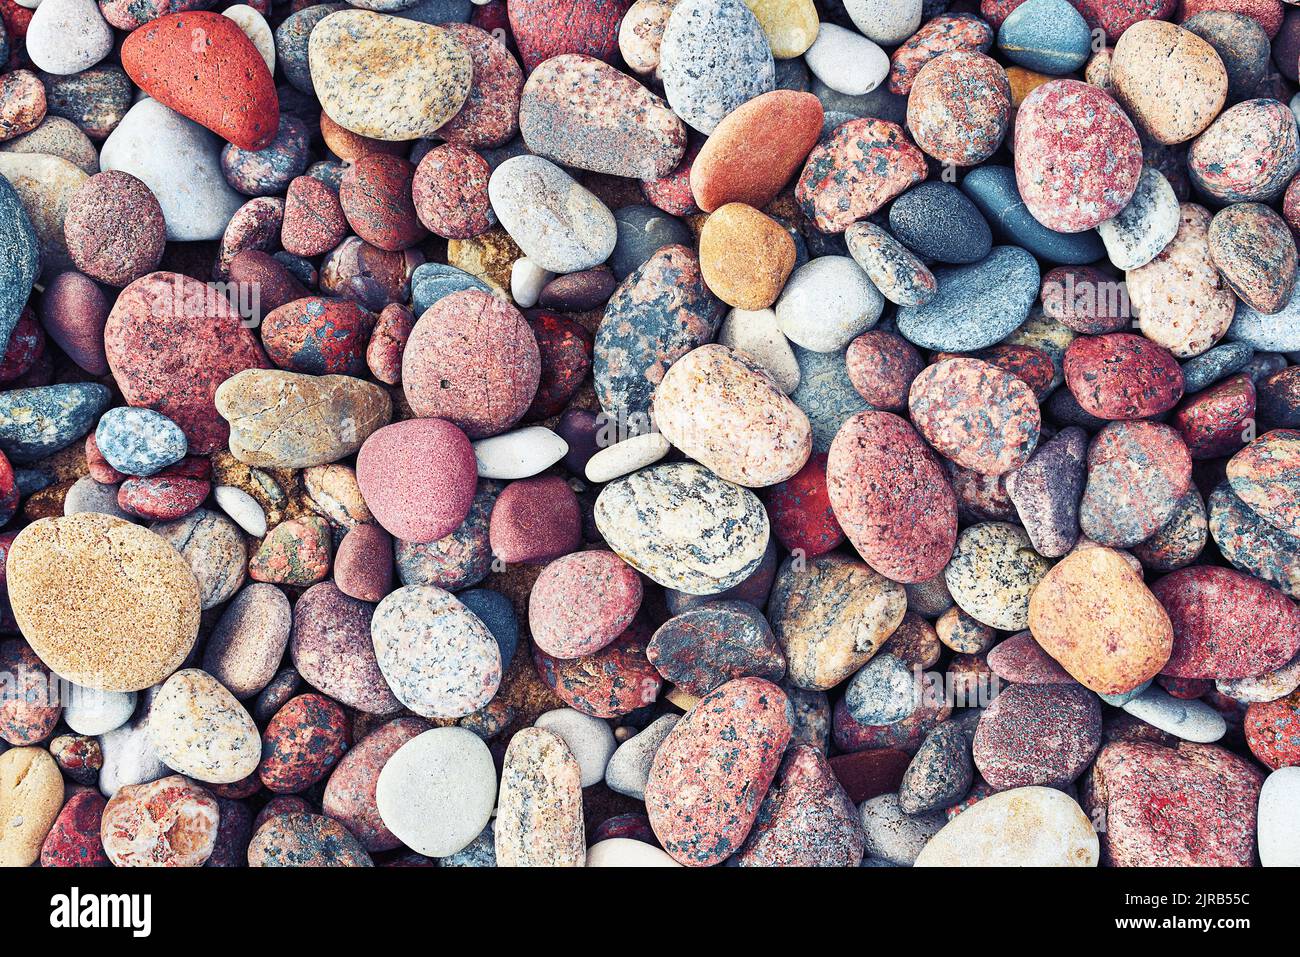 Multicolored colorful sea pebbles, nature background. Small stones. Top view. Stock Photo